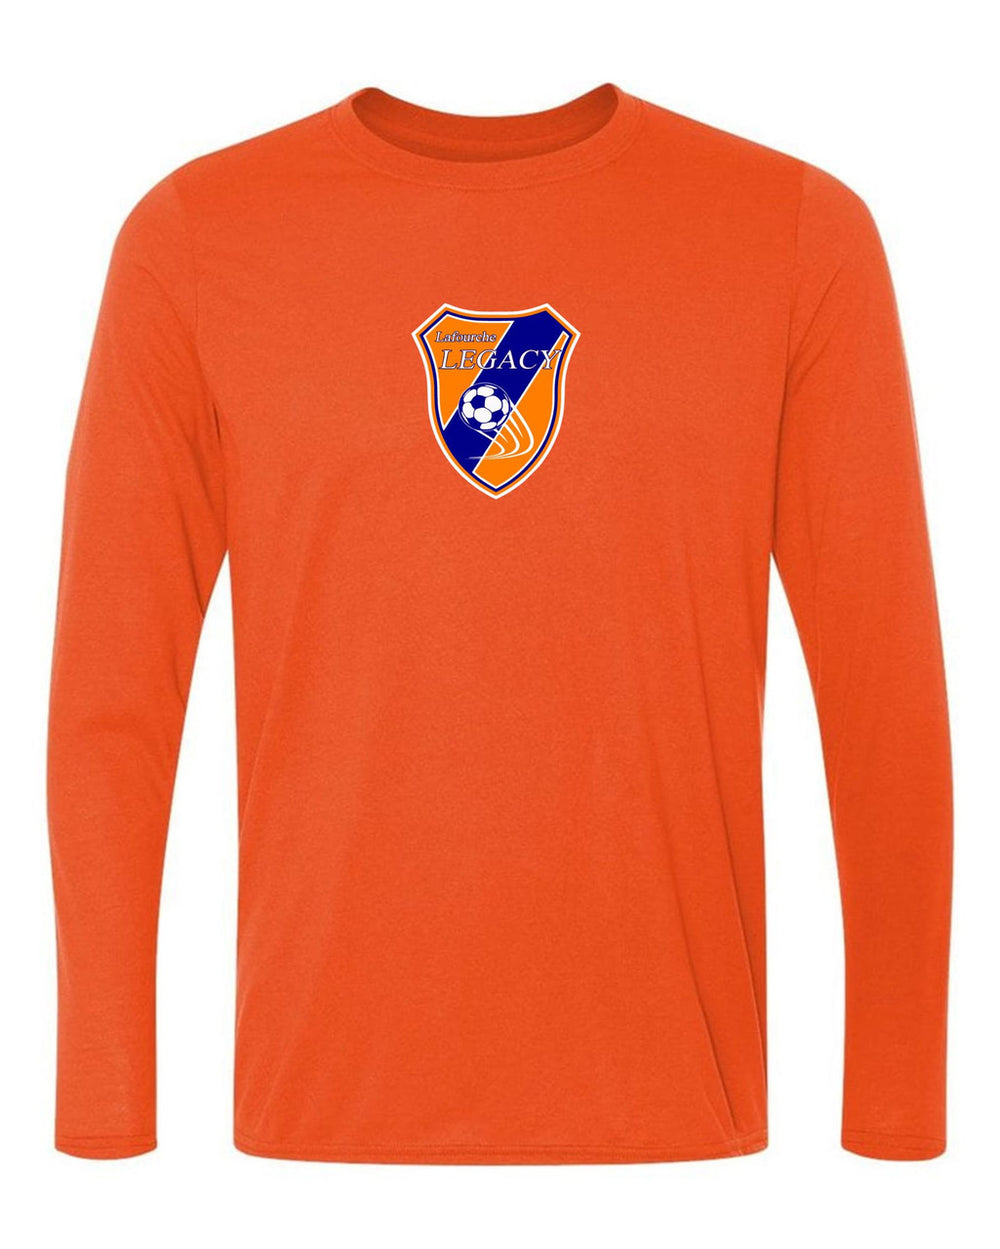 Lefourche Legacy Long-sleeve T-shirt - Navy or Orange    - Third Coast Soccer